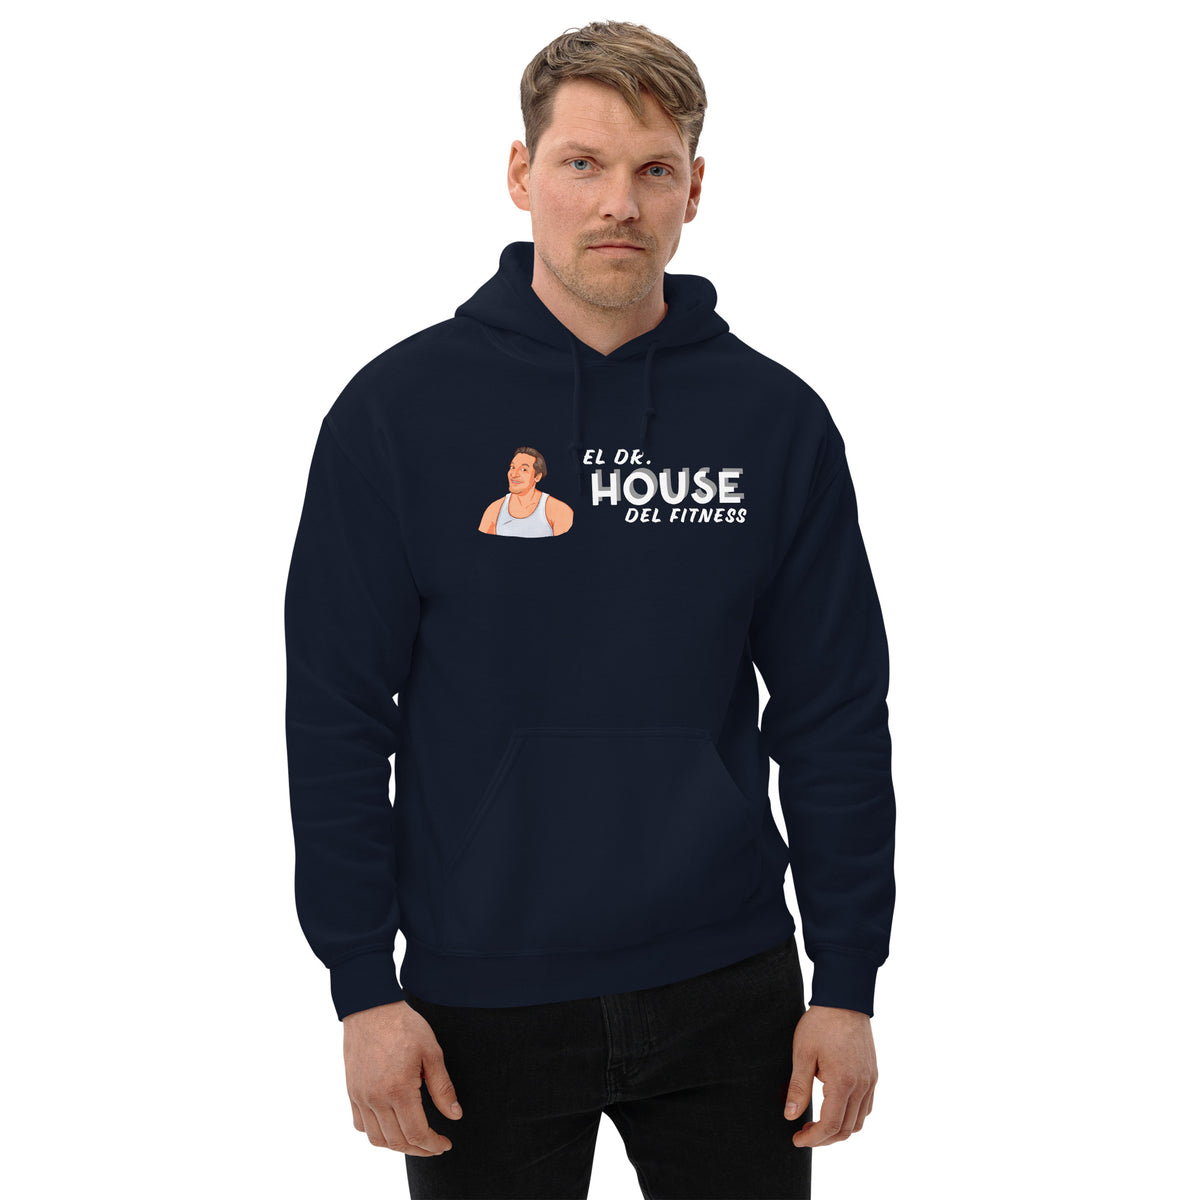 Hoodie para Hombre - El Dr. House del Fitness